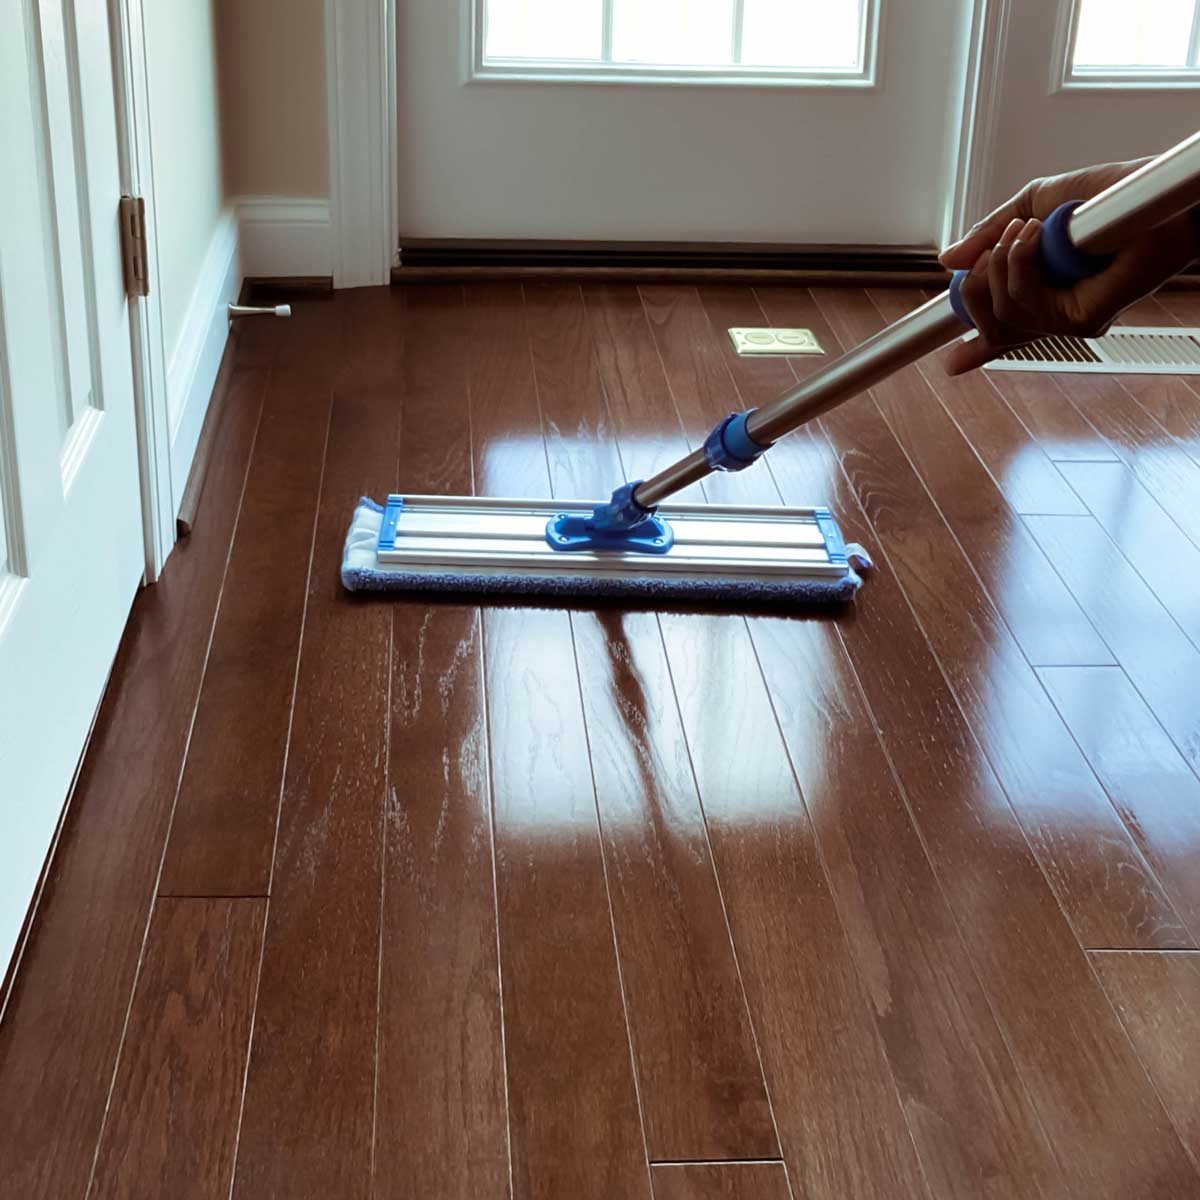 How To Clean Hardwood Floors Diy Family Handyman